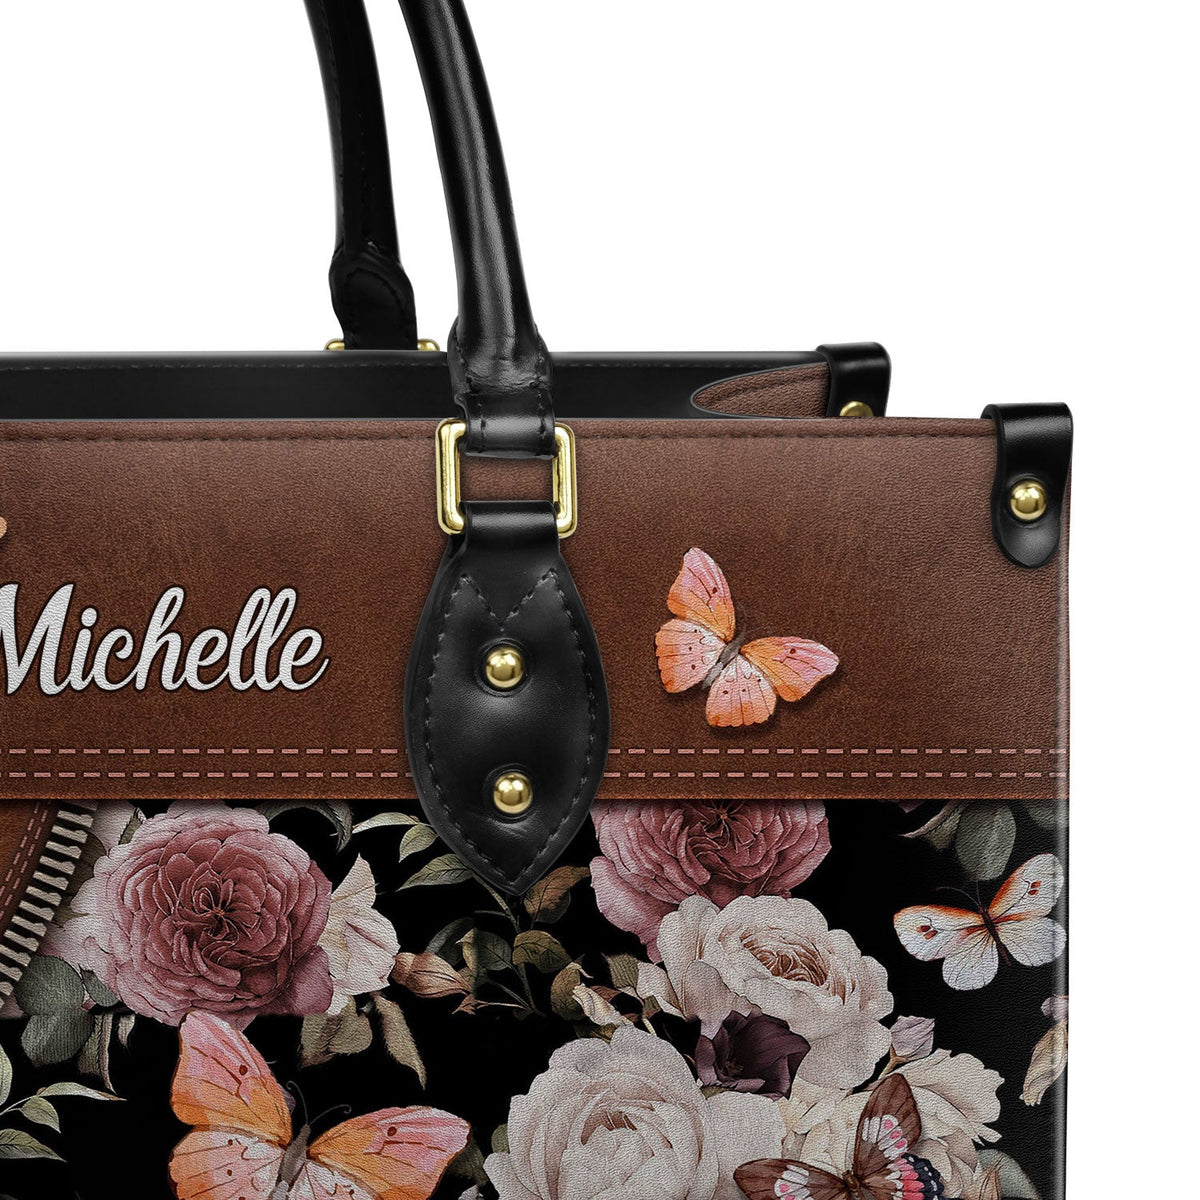 Fendi First Sight Handbag - Caramel - All High Quality Luxury Brands Copies  | Handbag, How to make handbags, Fendi